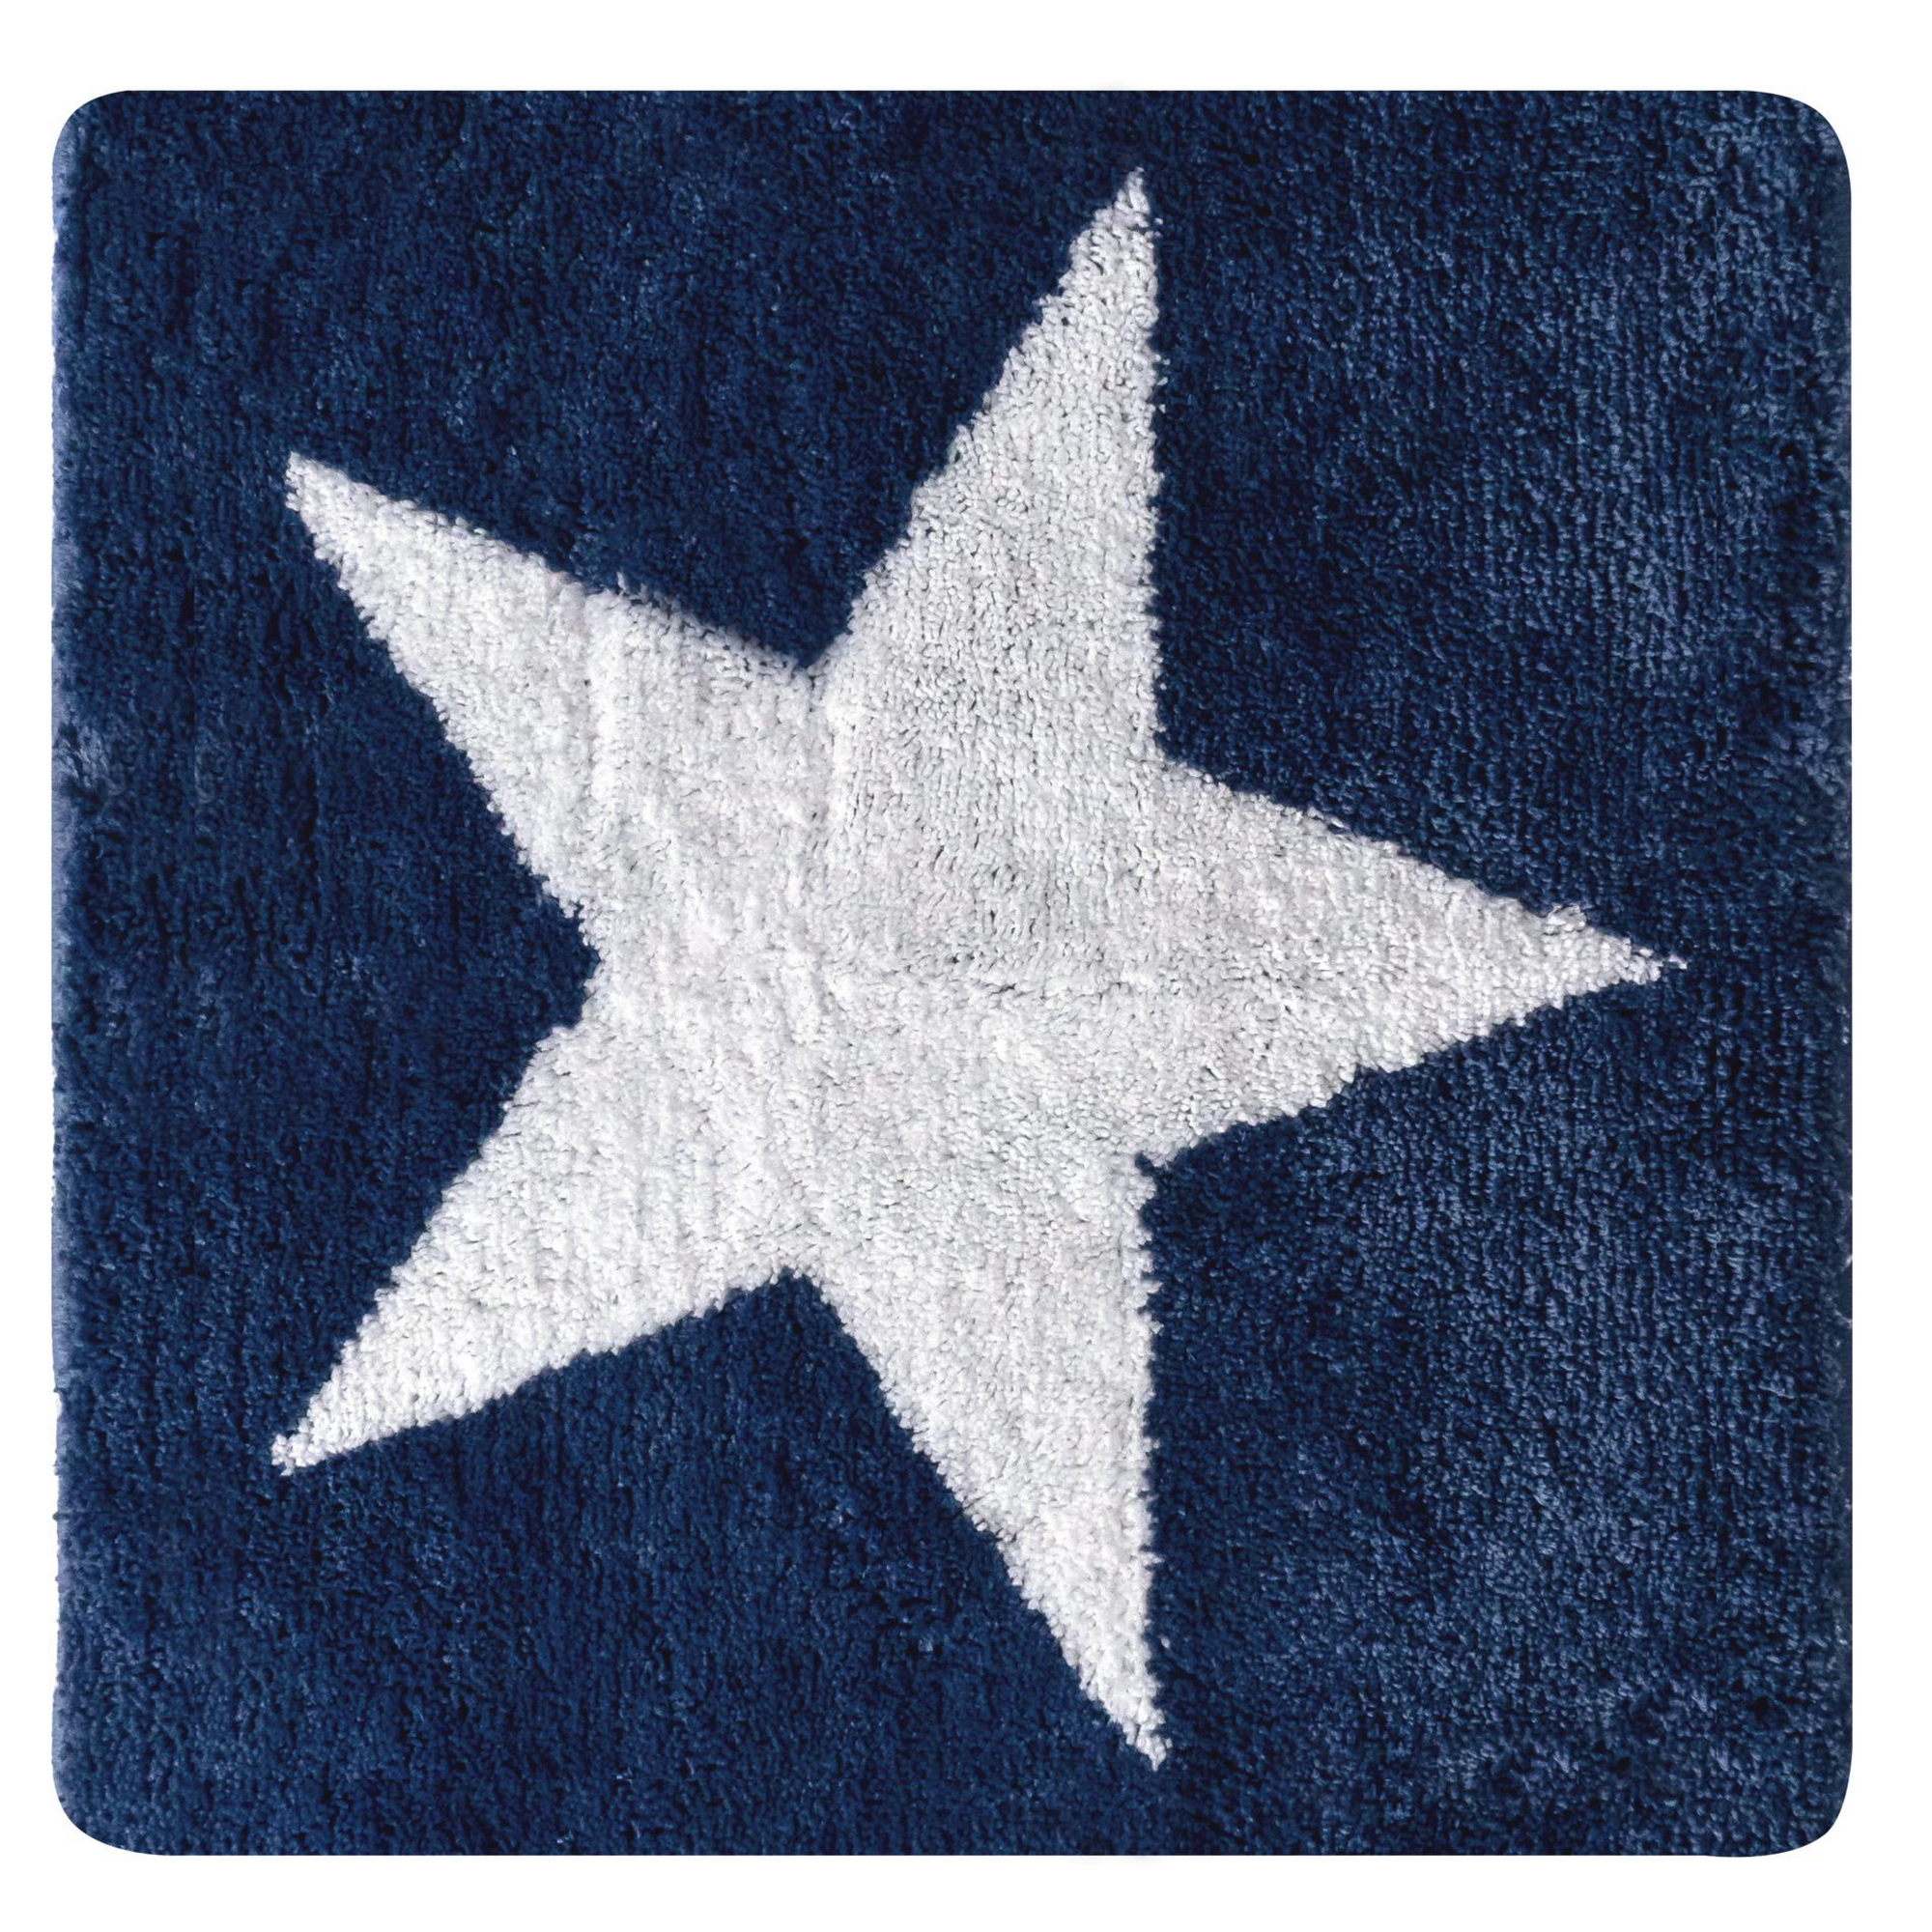 Badteppich 'Star' blau/weiß 55 x 50 cm + product picture